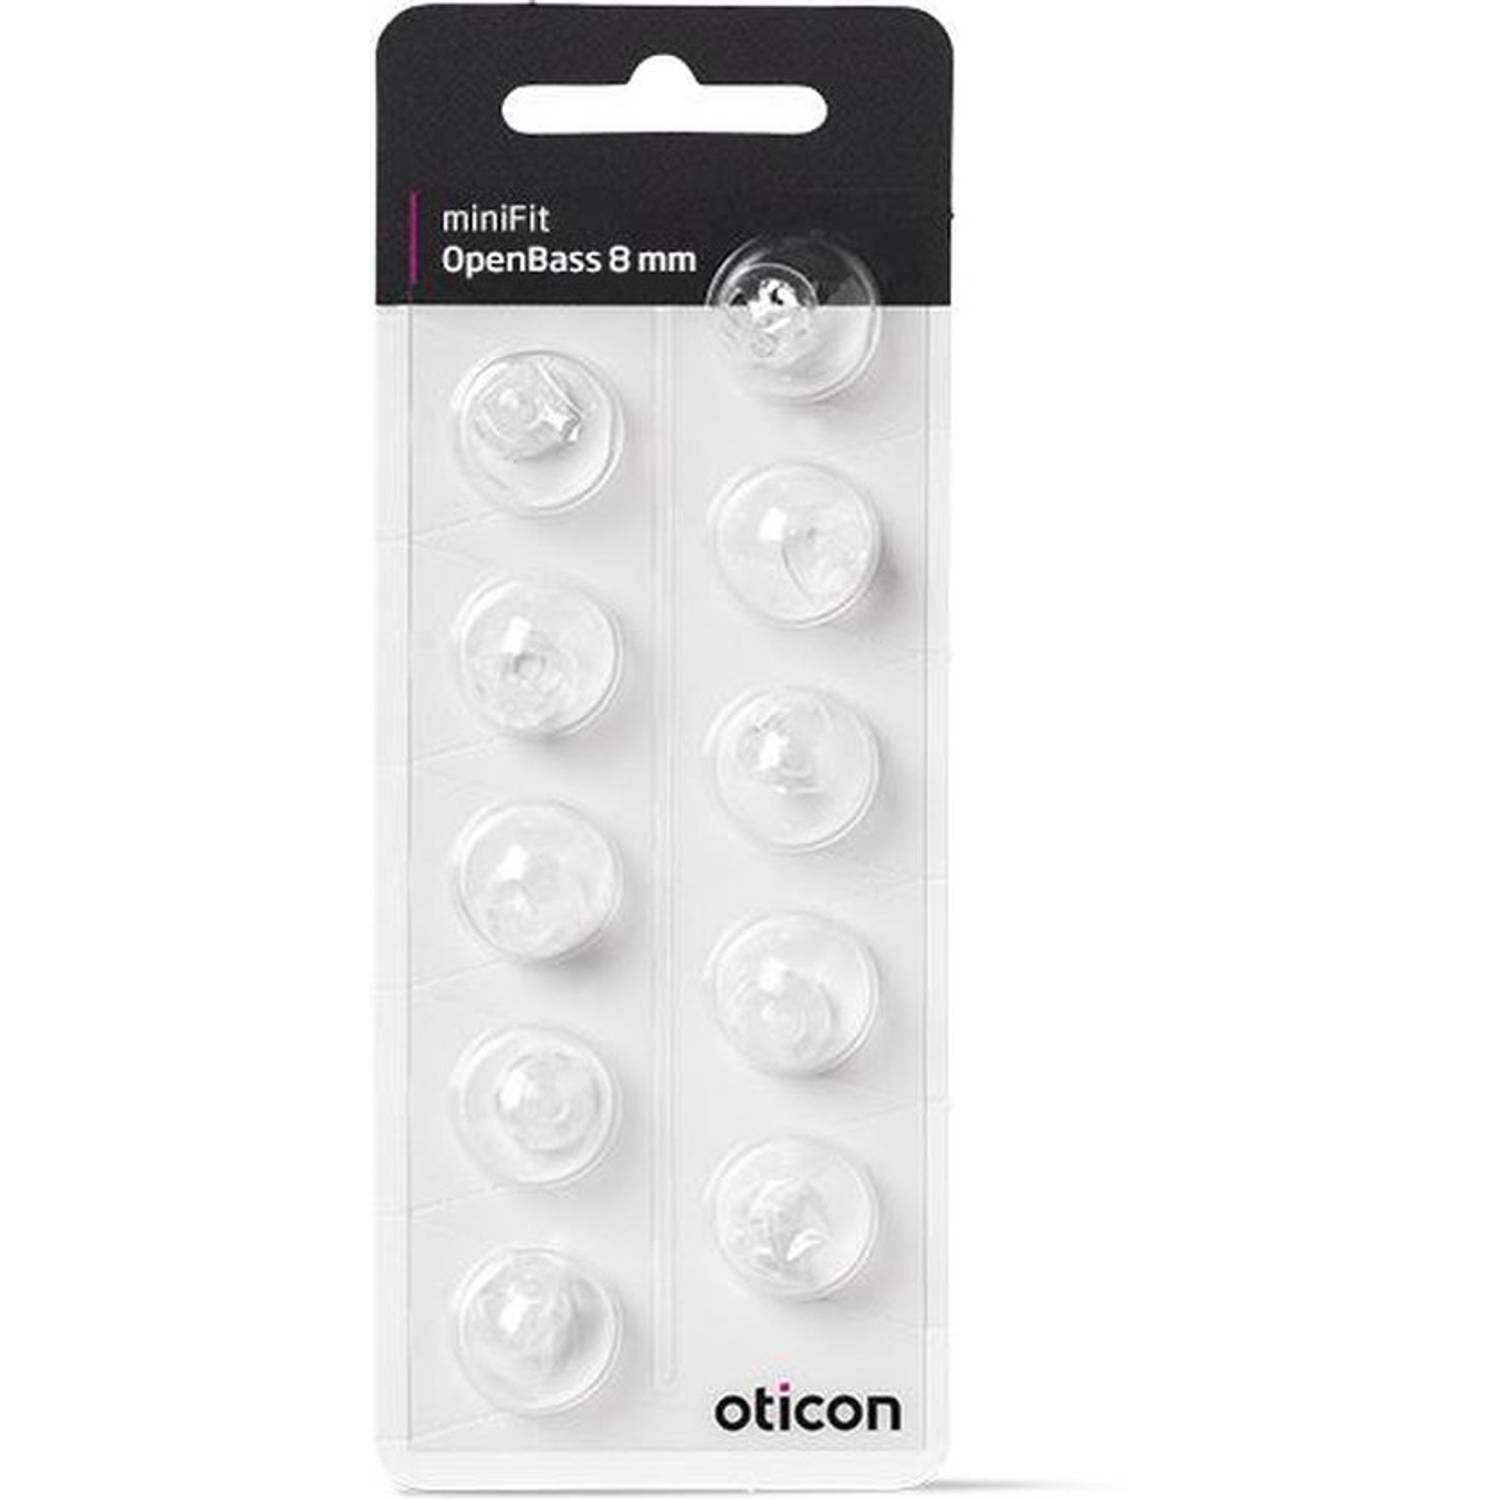 Oticon Bernafon Philips OpenBass dome miniFit 8mm 10 stuks tip - oorstukje - oortje